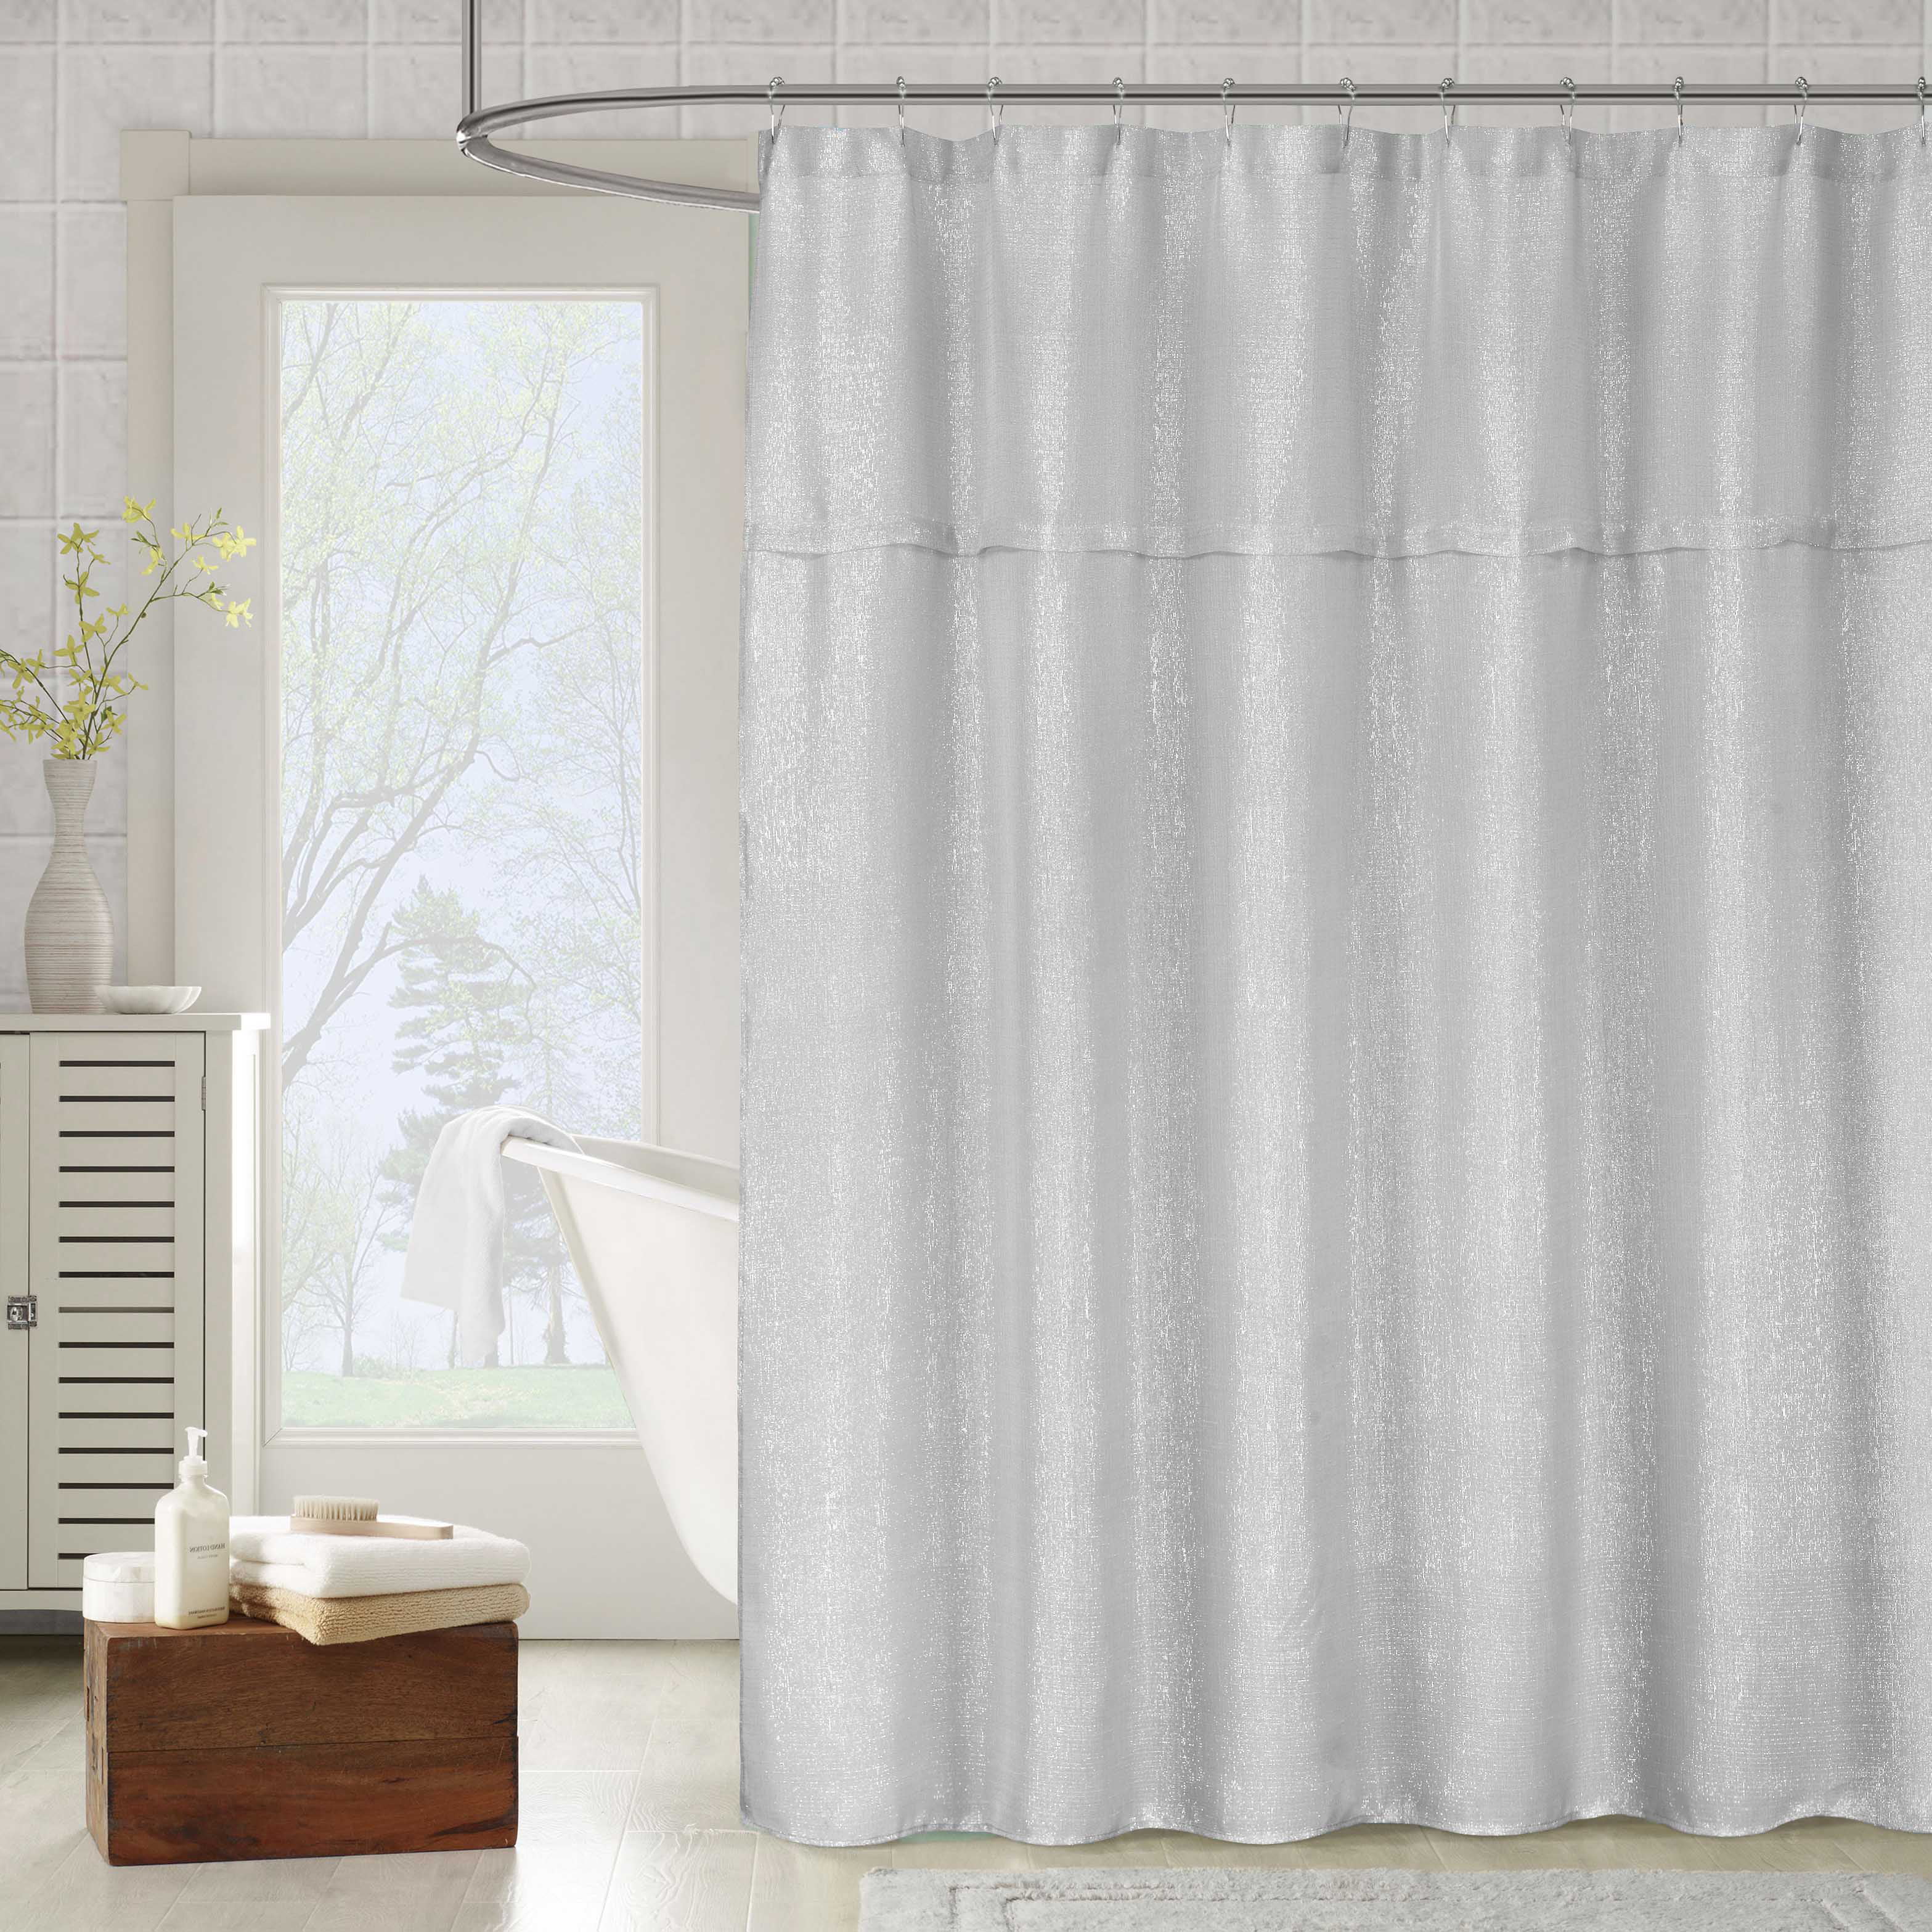  Metallic  Silver Gray Fabric Shower Curtain  Textured Sheer 